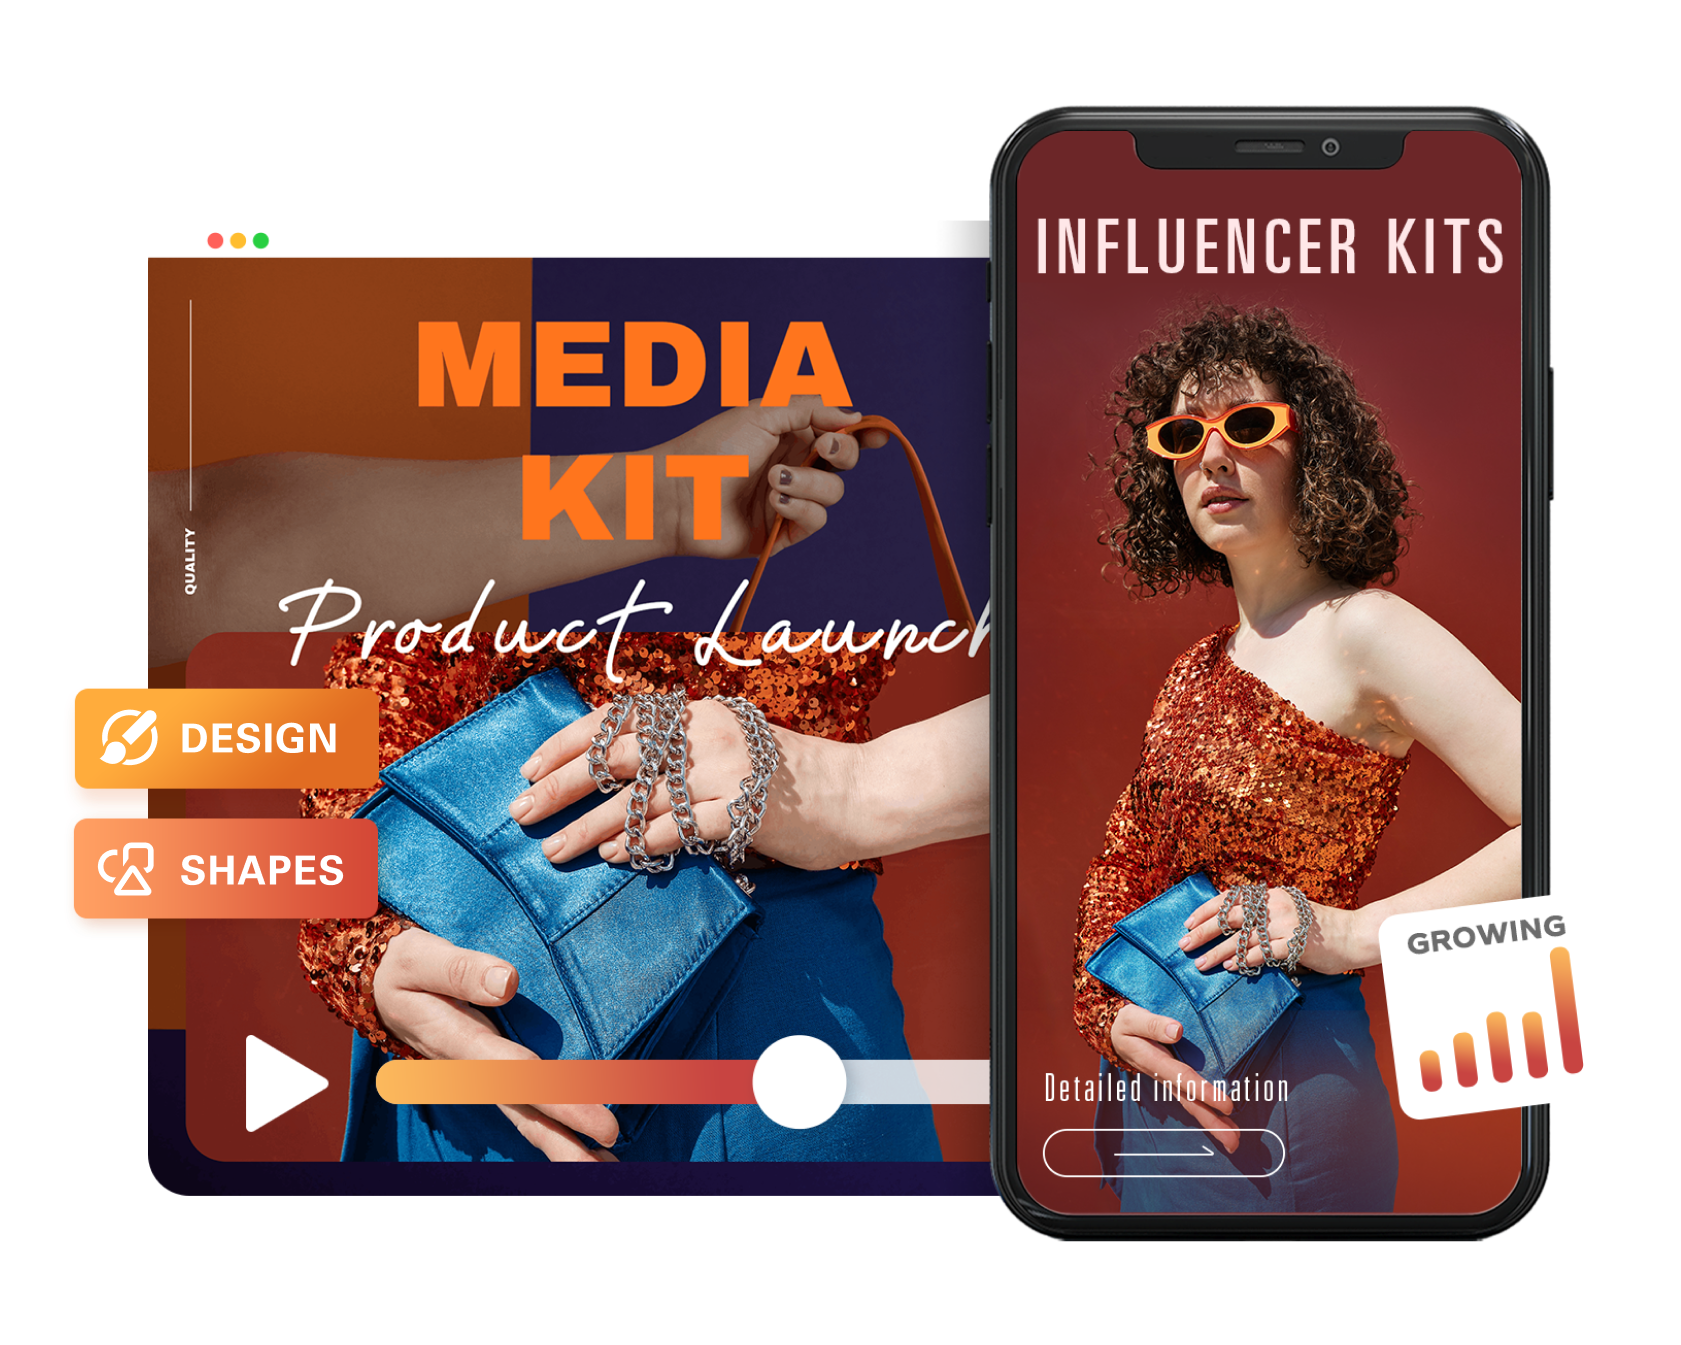 CapCut crea tu propio Media kit si eres influencer 😘 #influencer #in